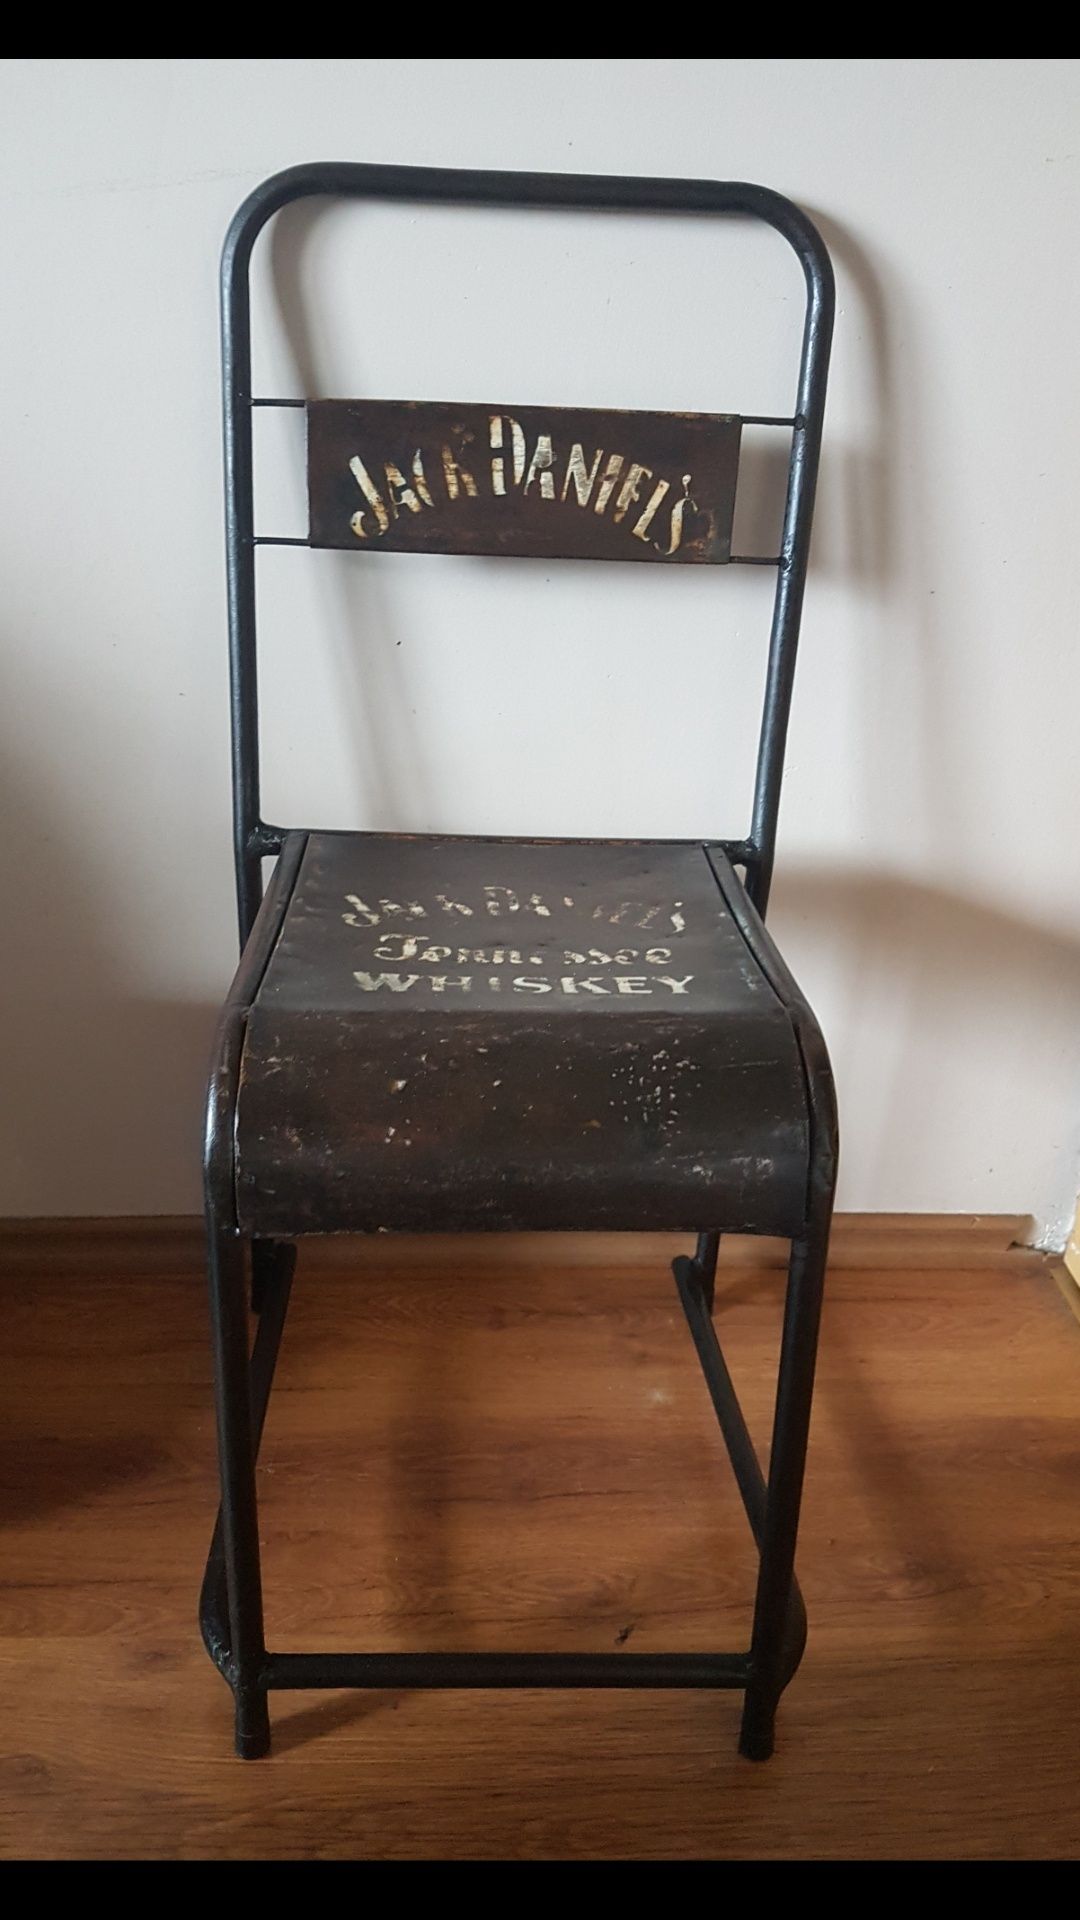 Stare metalowe krzesło Jack Daniels unikat